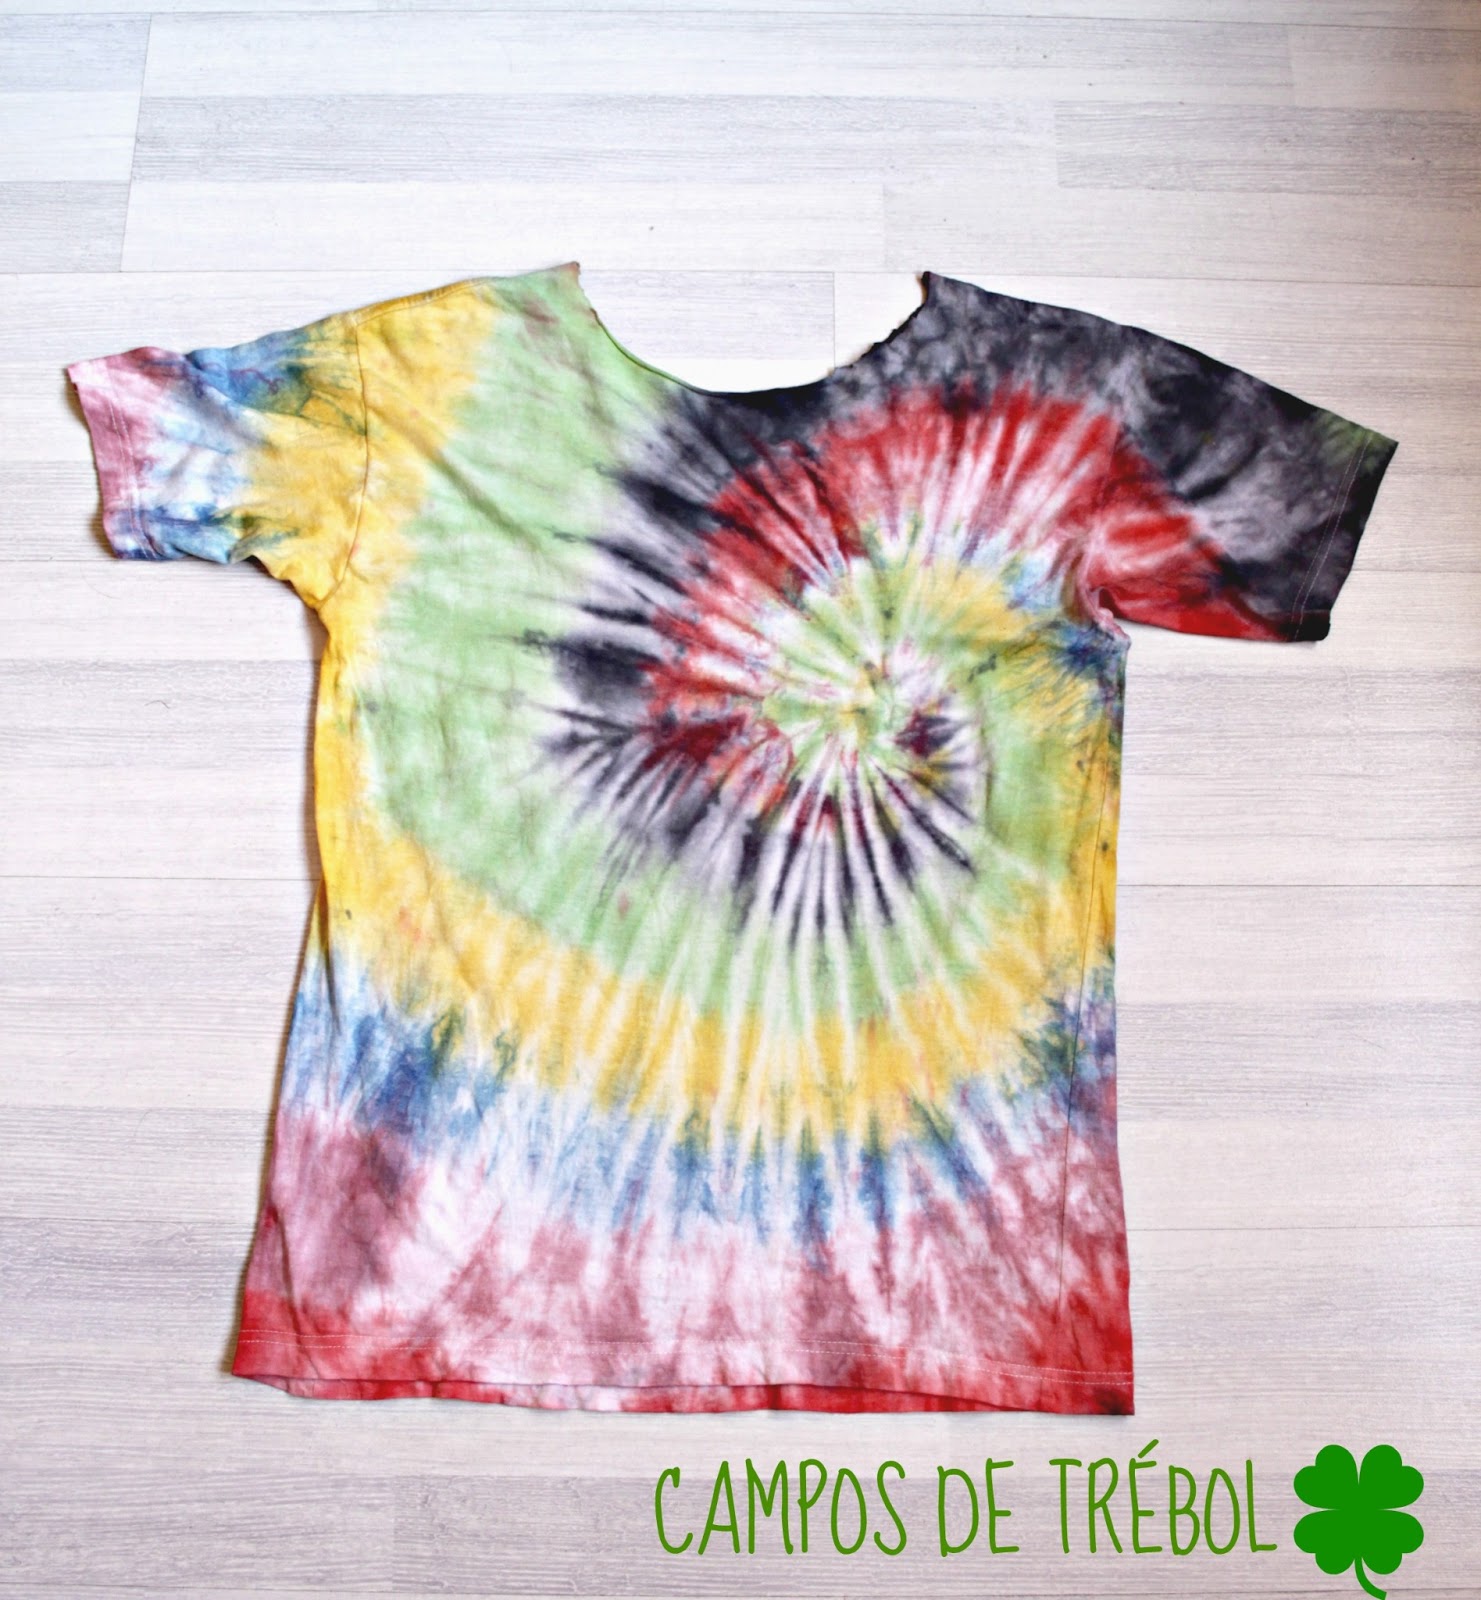 Lleno aspecto sólido Campos de Trébol: Tiñendo camisetas hippies